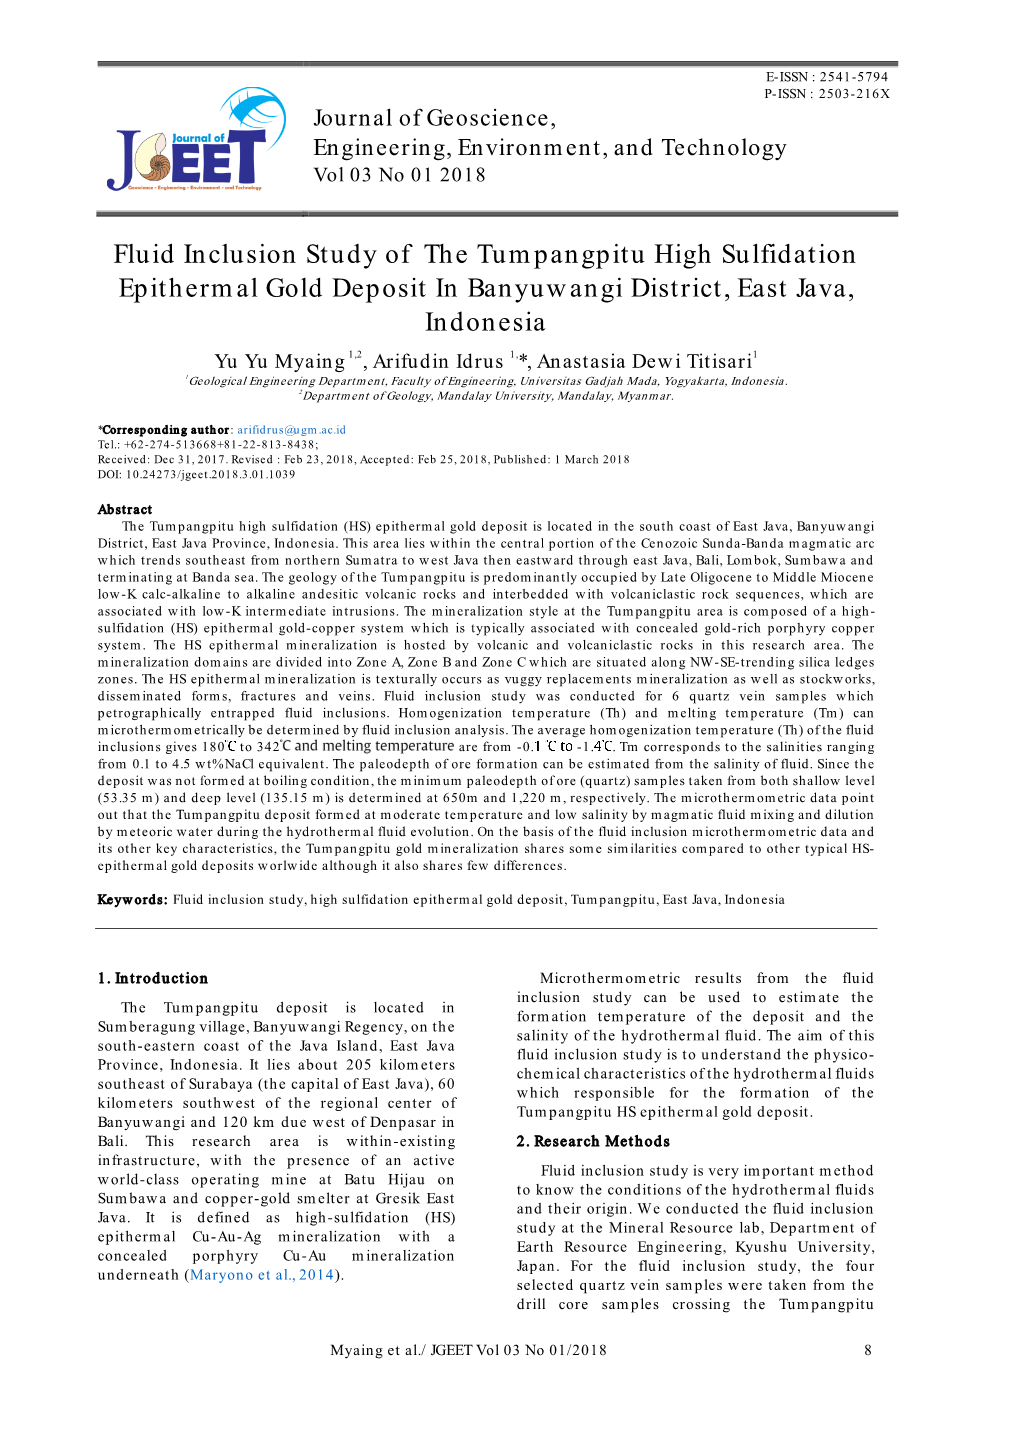 Fluid Inclusion Study of the Tumpangpitu High Sulfidation